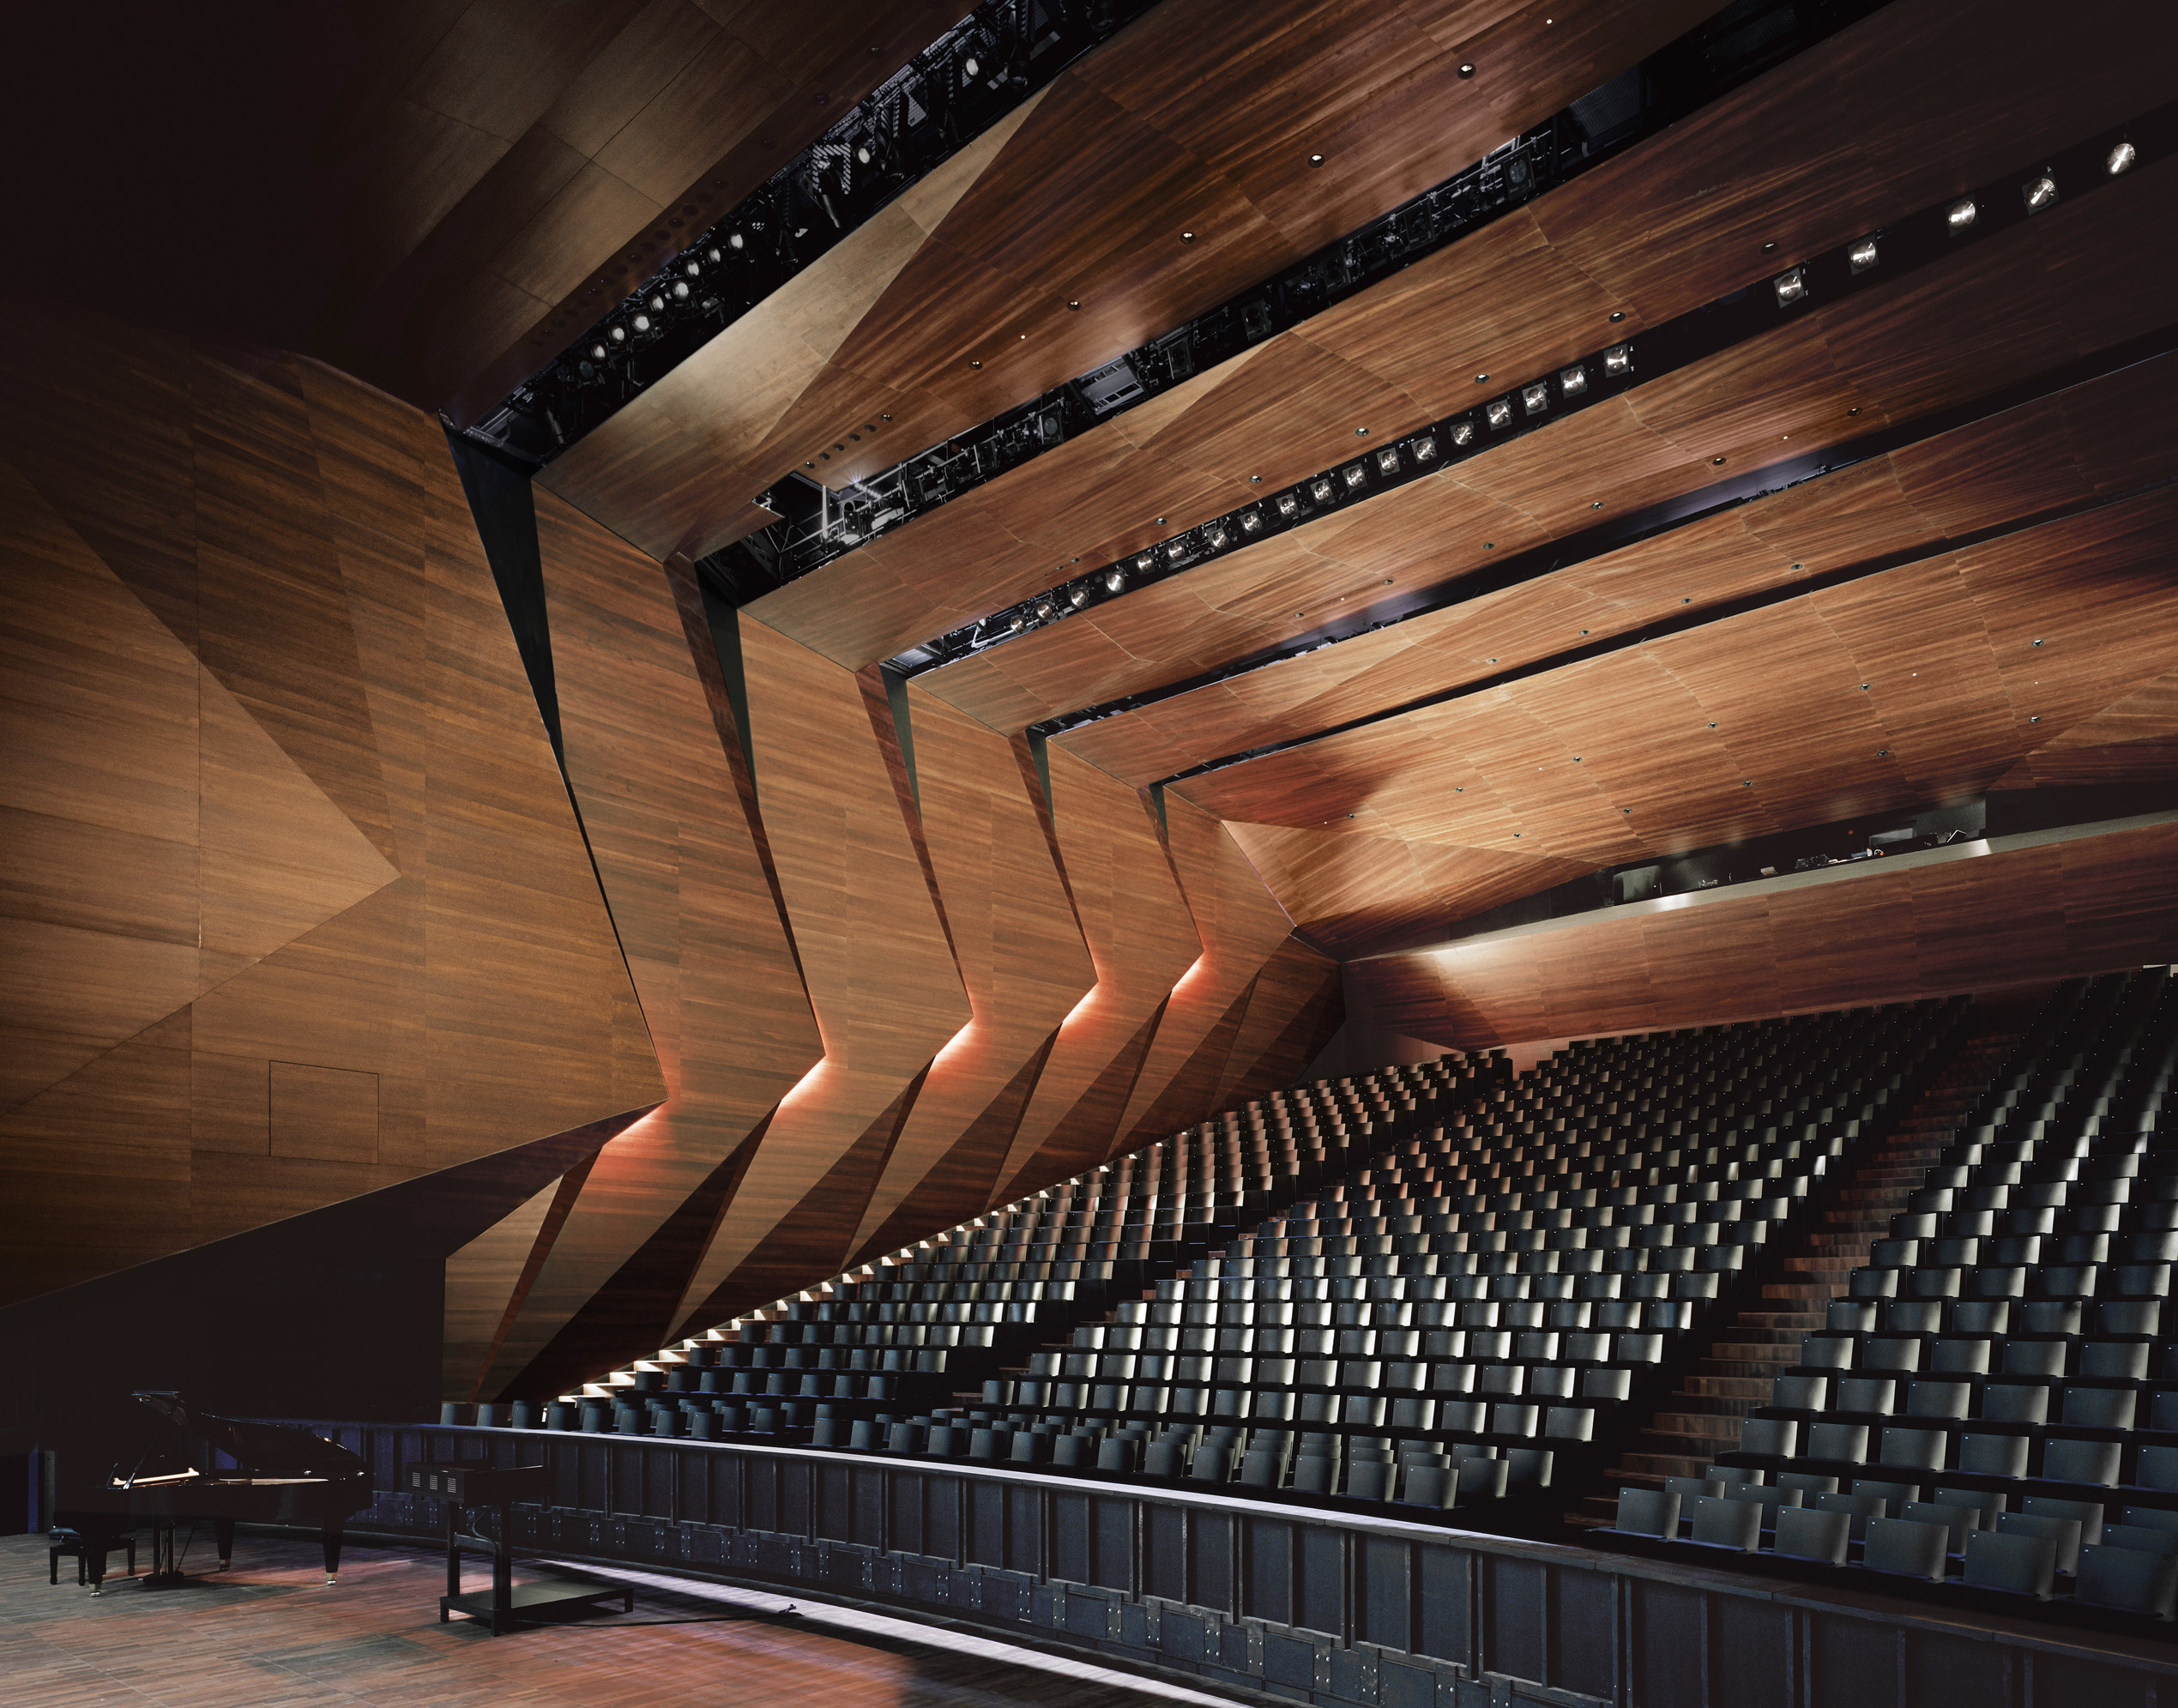 Modern Concert Hall Interior | Joy Studio Design Gallery - Best Design